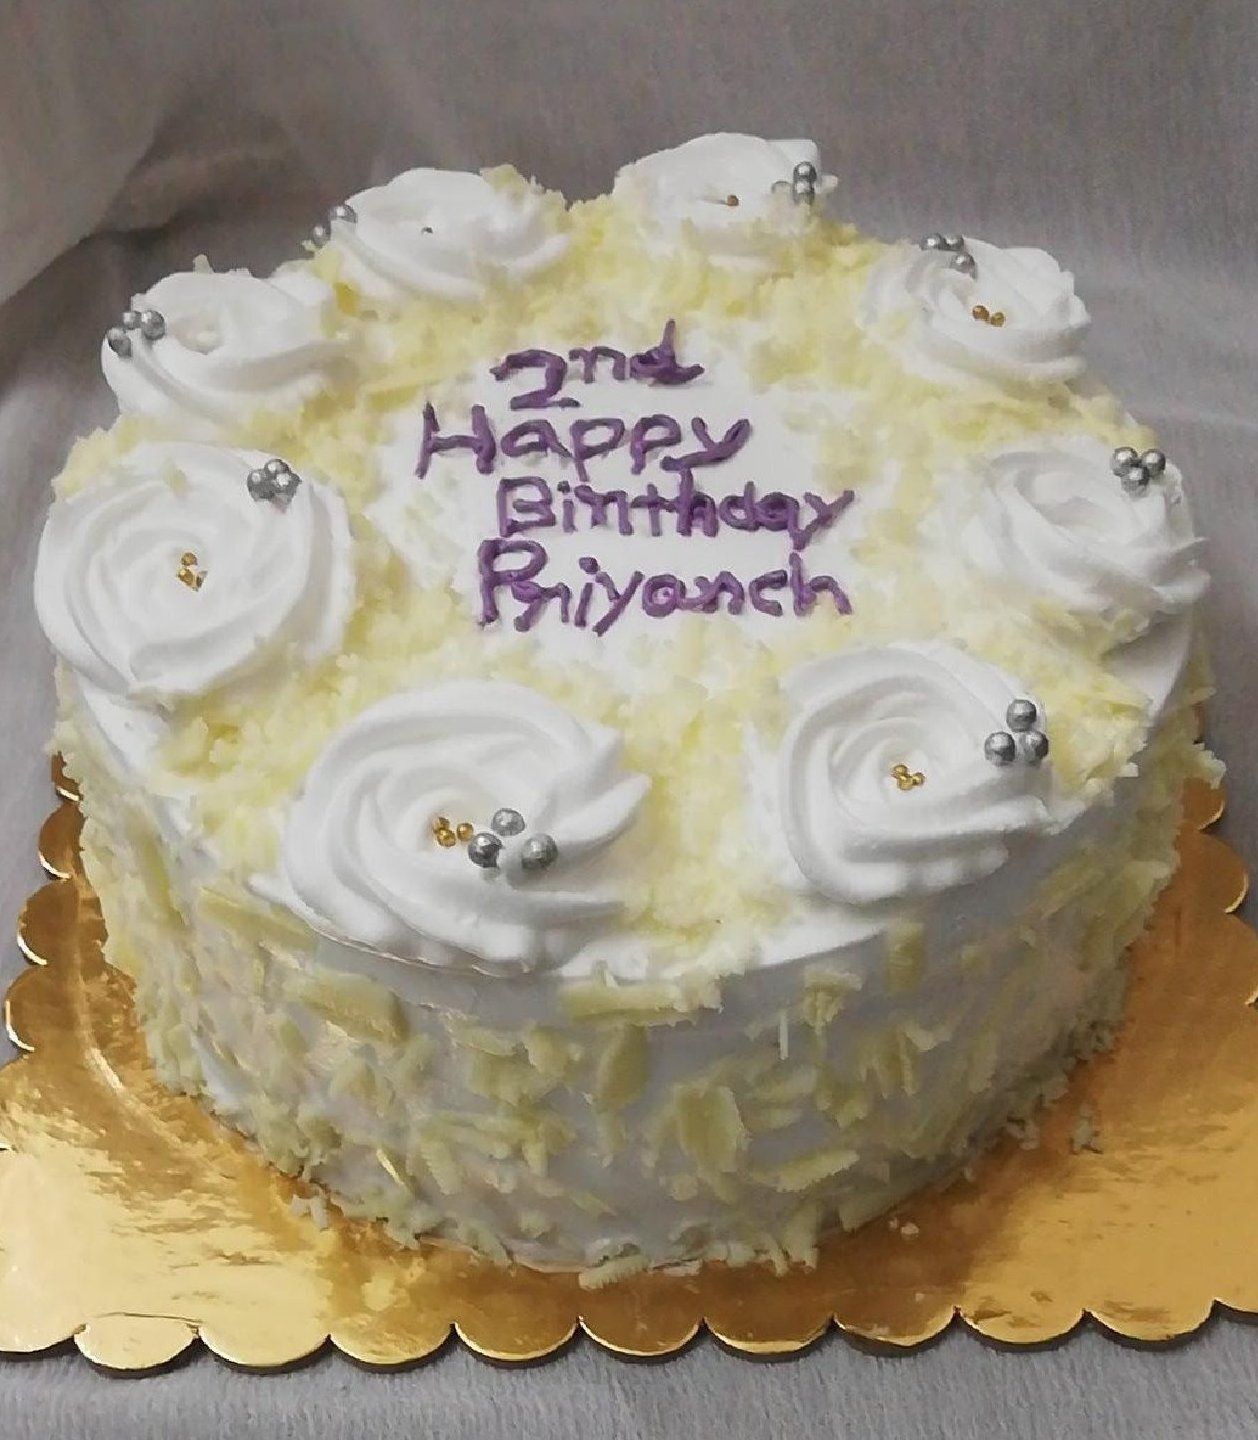 Plain Rose Message Cake #4 | Handmade cake, Cake, Happy 25th birthday